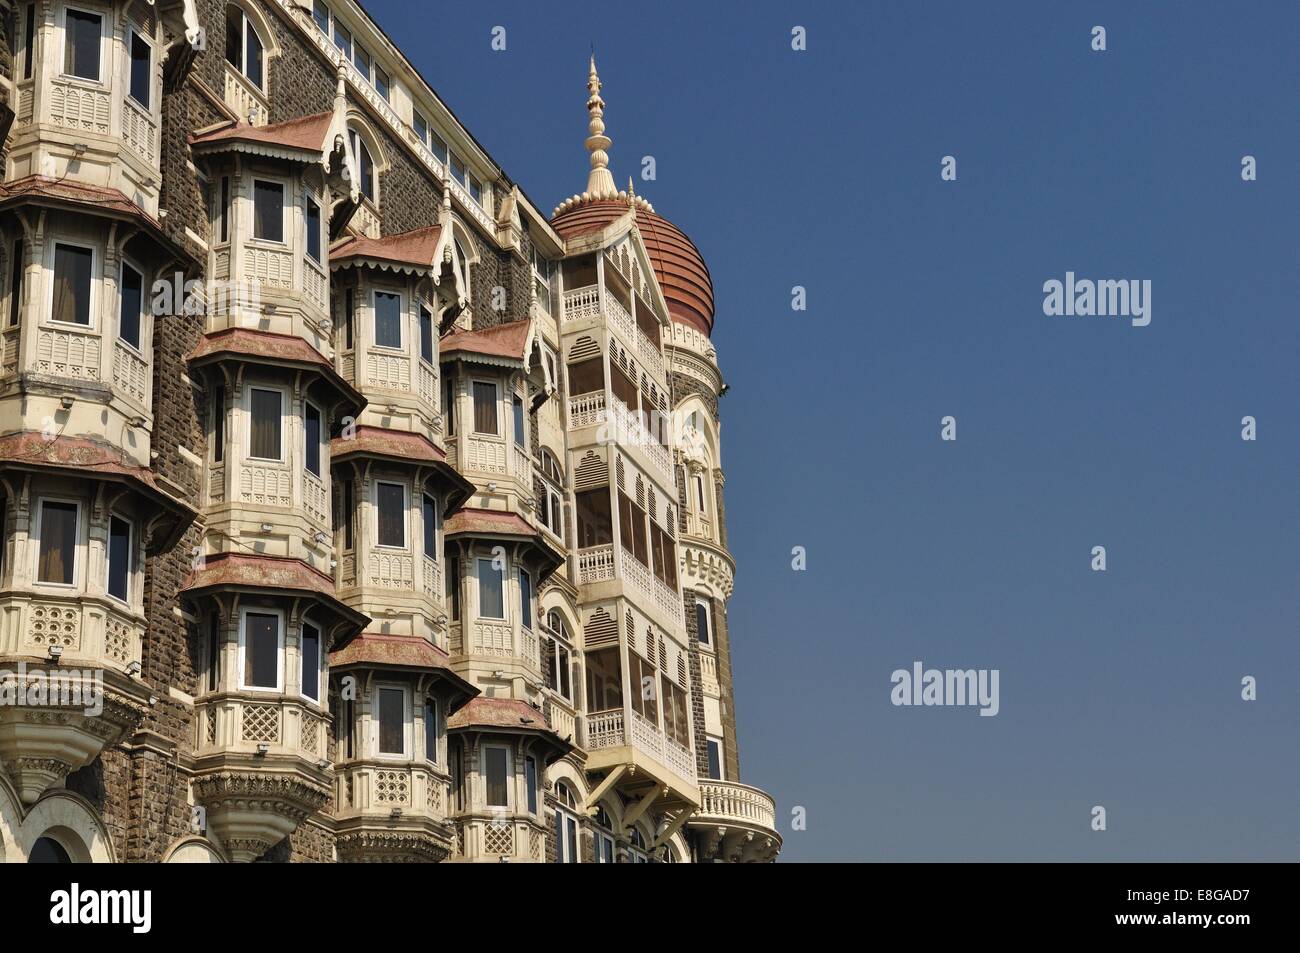 Looking up at the corner of the Taj Mahal Palace Hotel in Mumbai, India Stock Photo